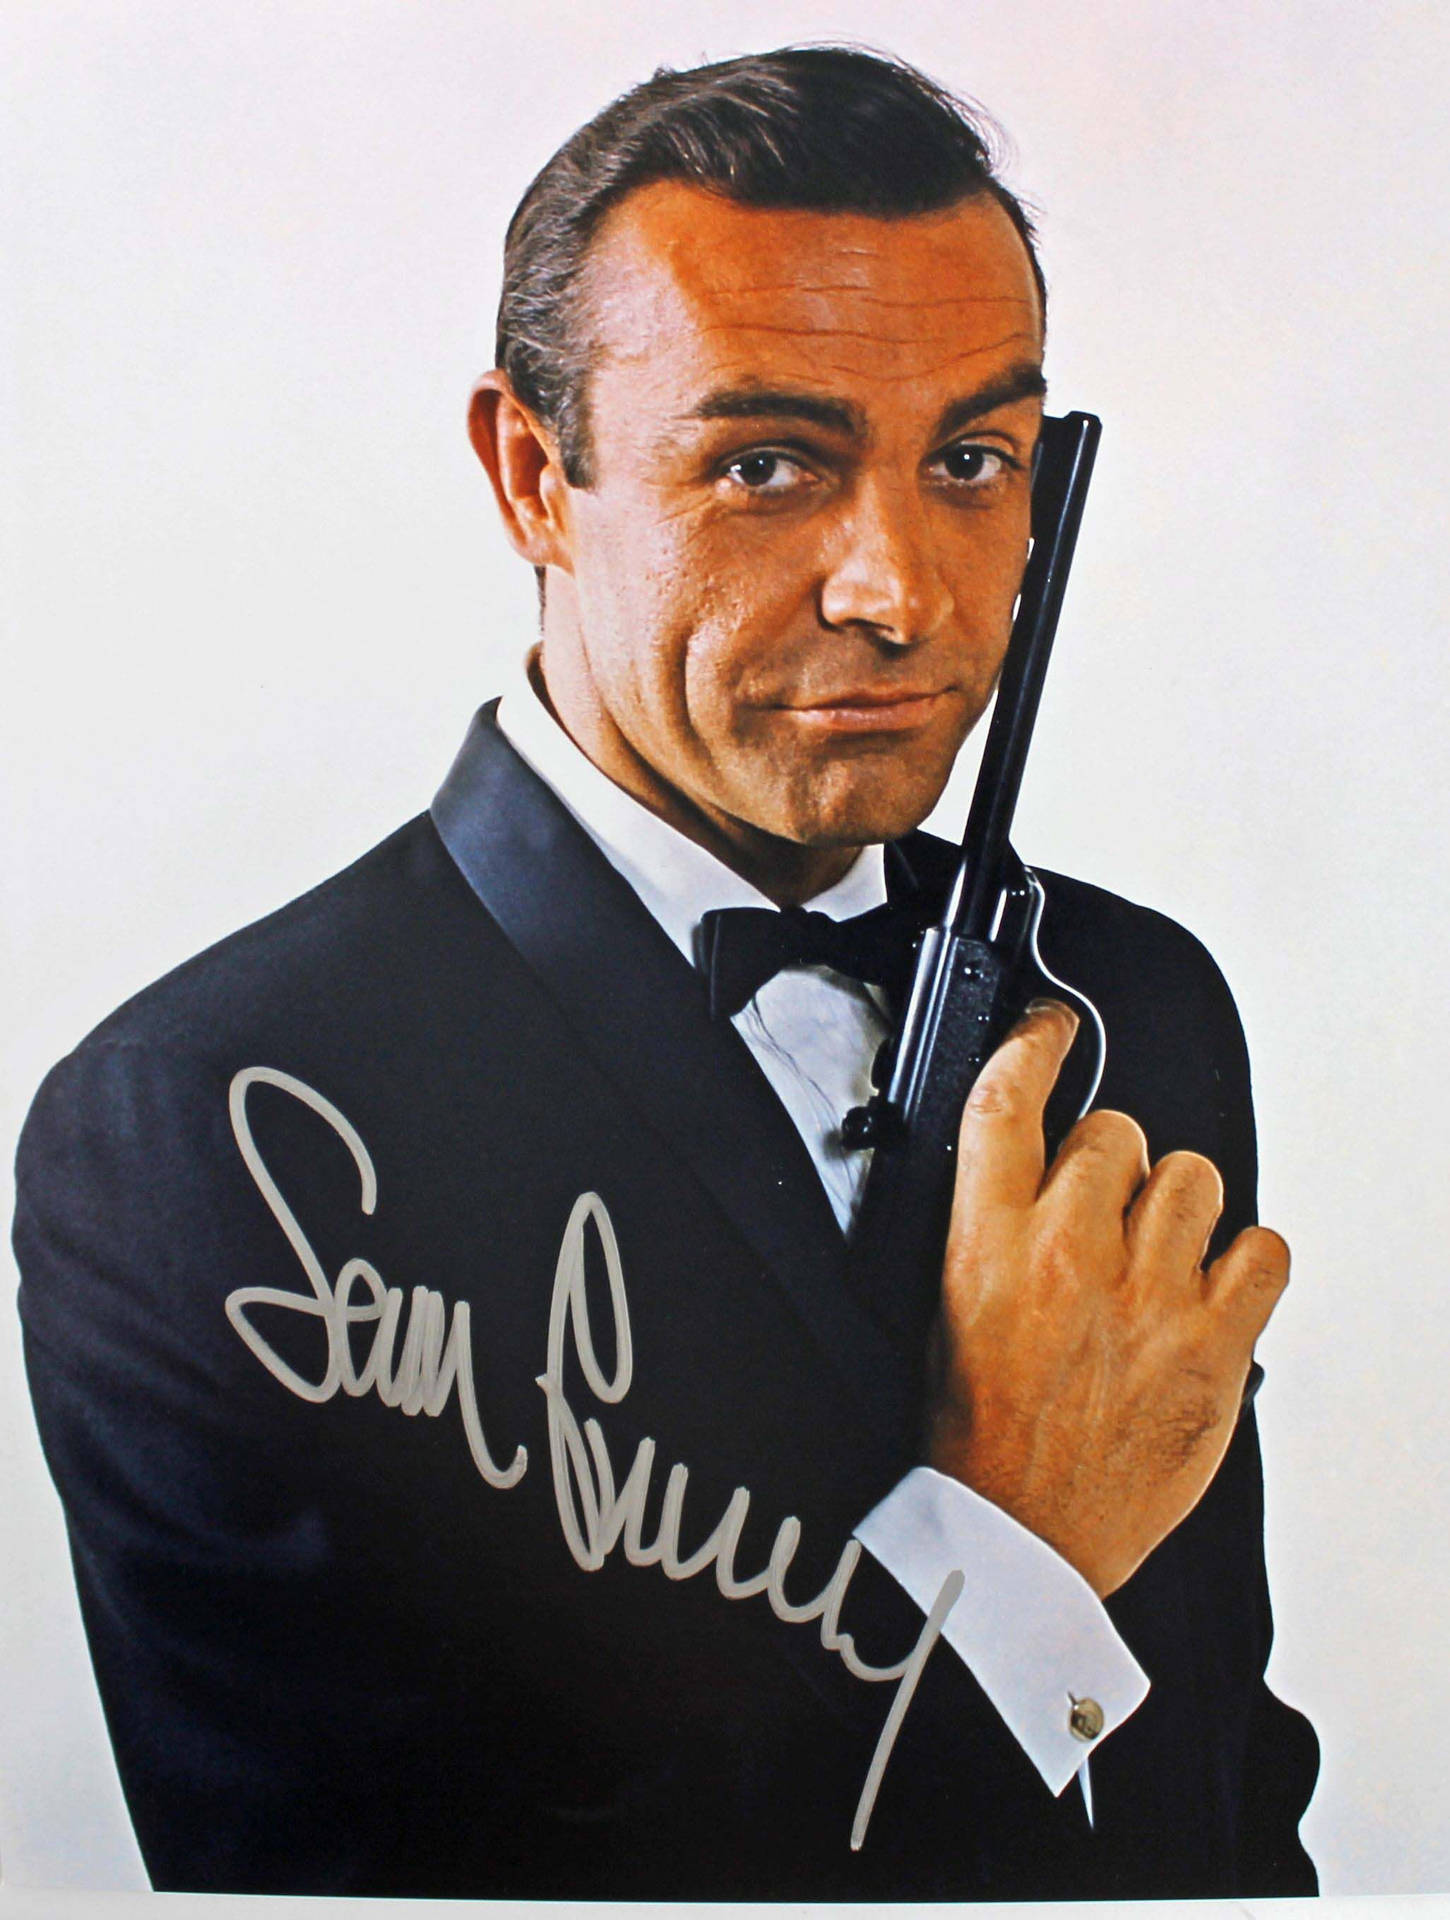 Sean Connery With Handgun